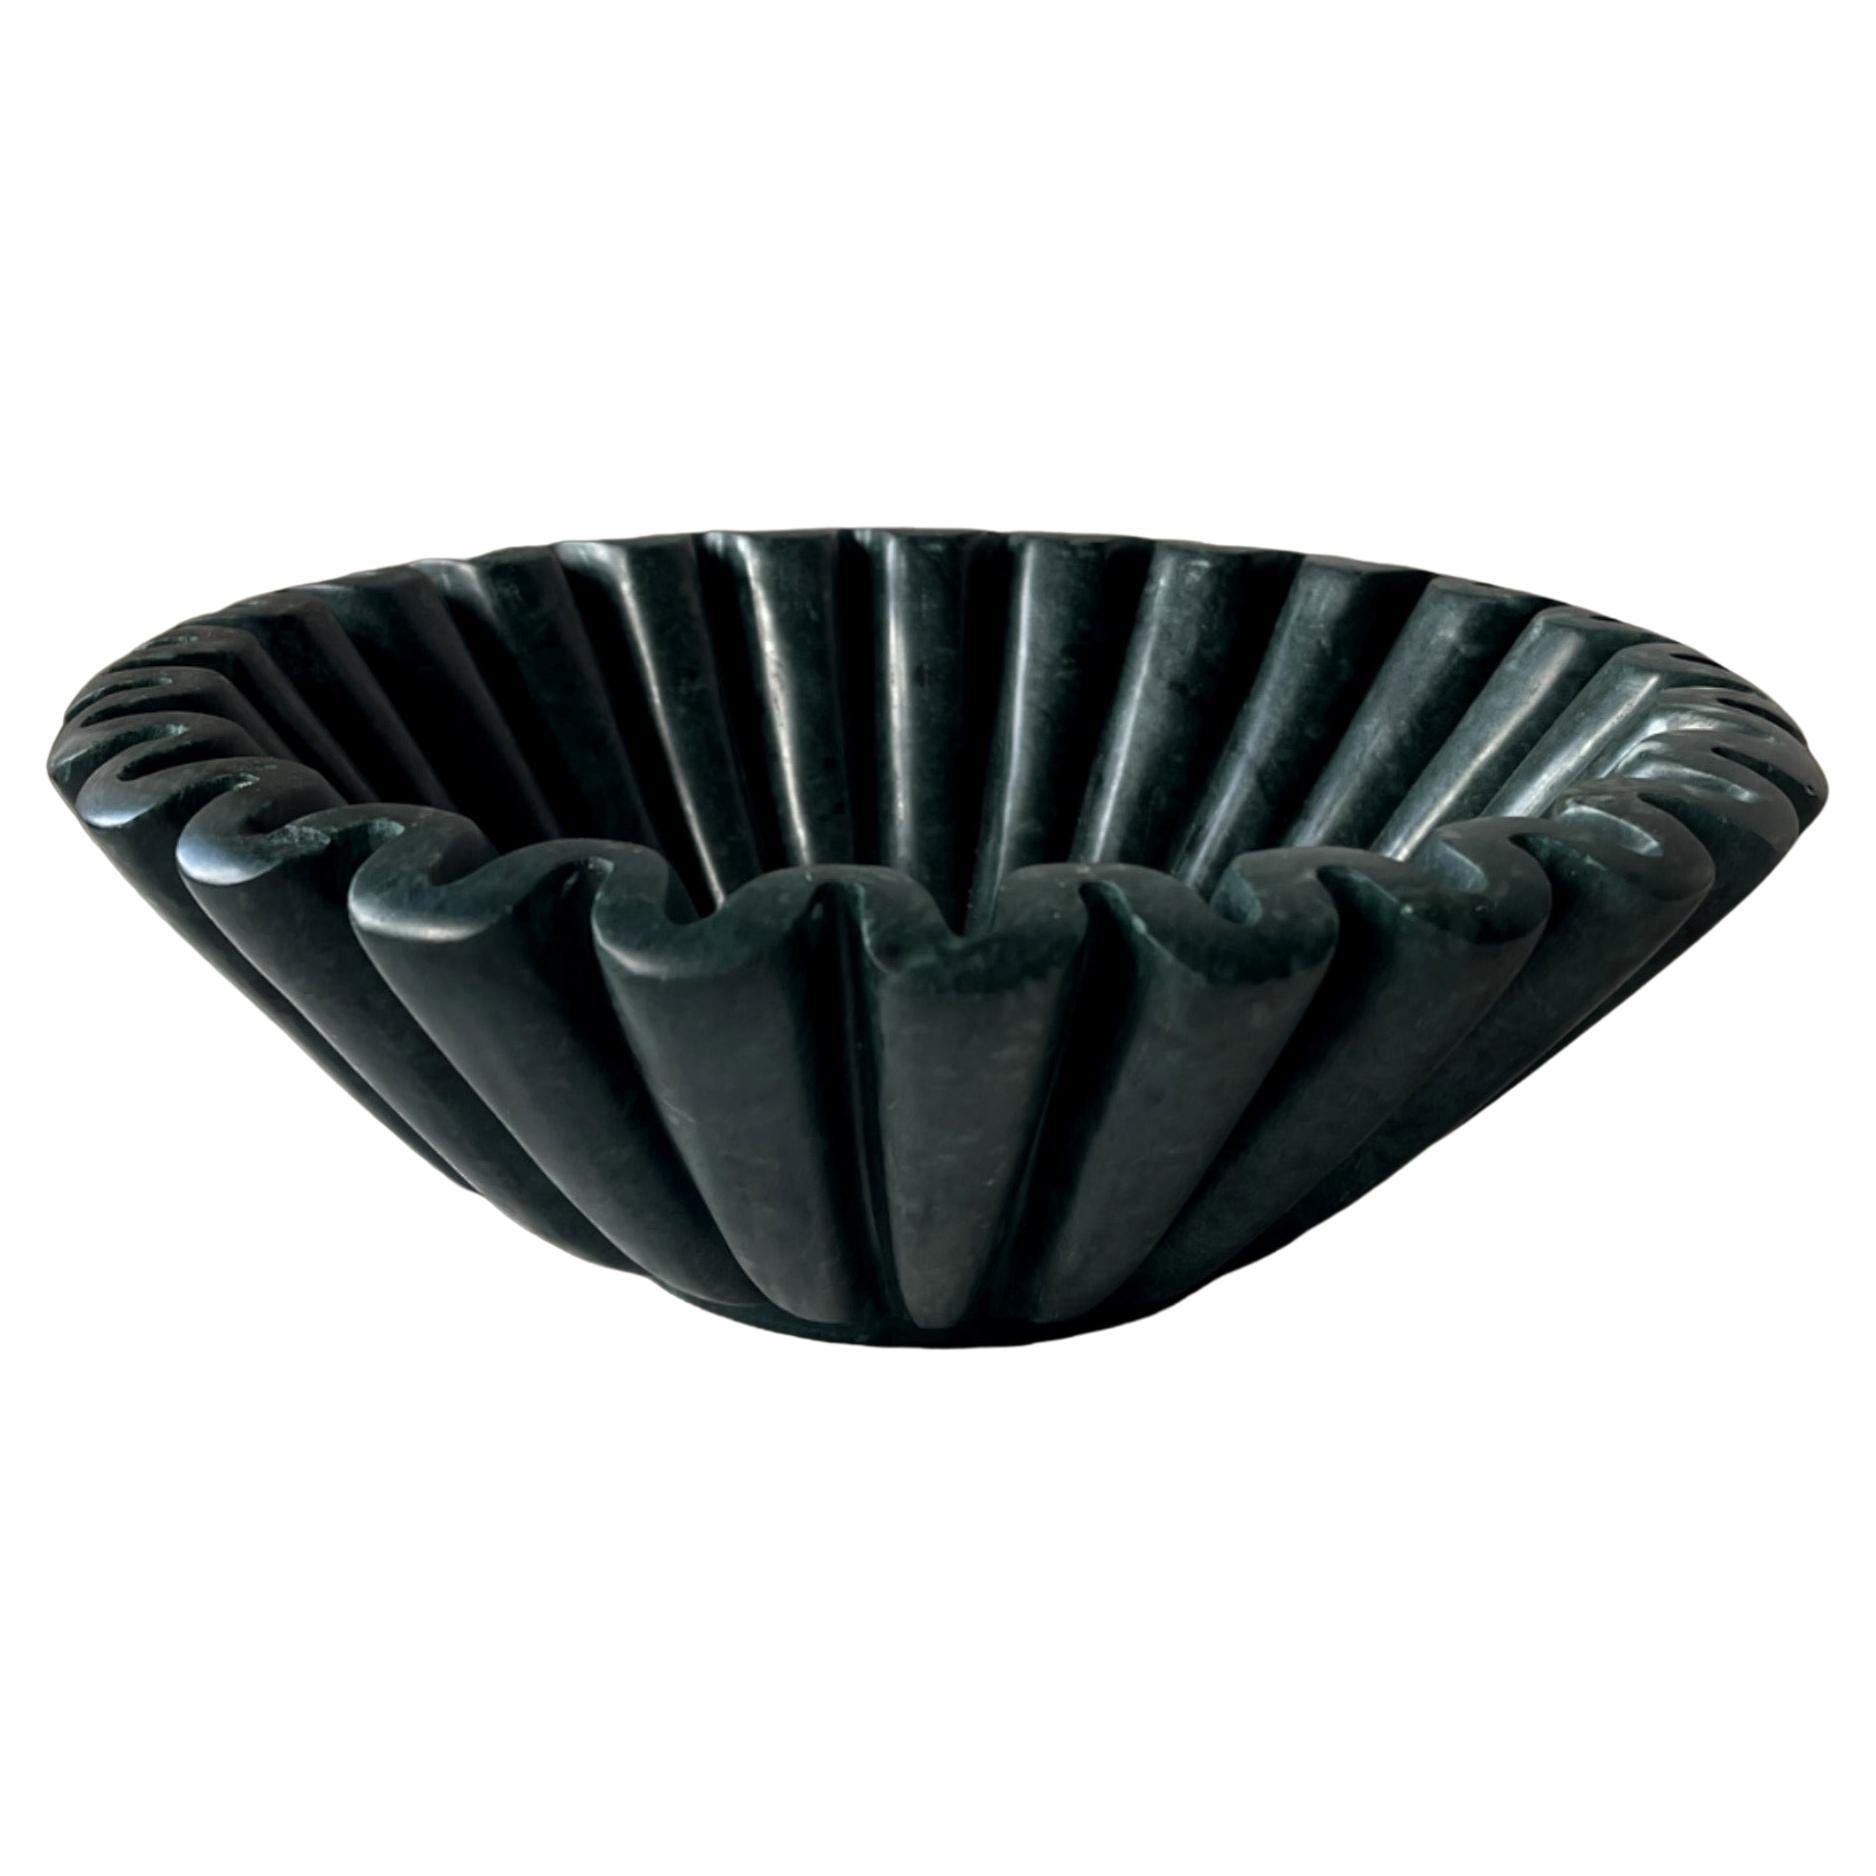 https://a.1stdibscdn.com/ruffle-bowl-dark-green-folded-edge-emerald-marble-bowl-by-anastasio-home-for-sale/f_77522/f_353952121690300161898/f_33032162_1677634422766_bg_processed.jpg